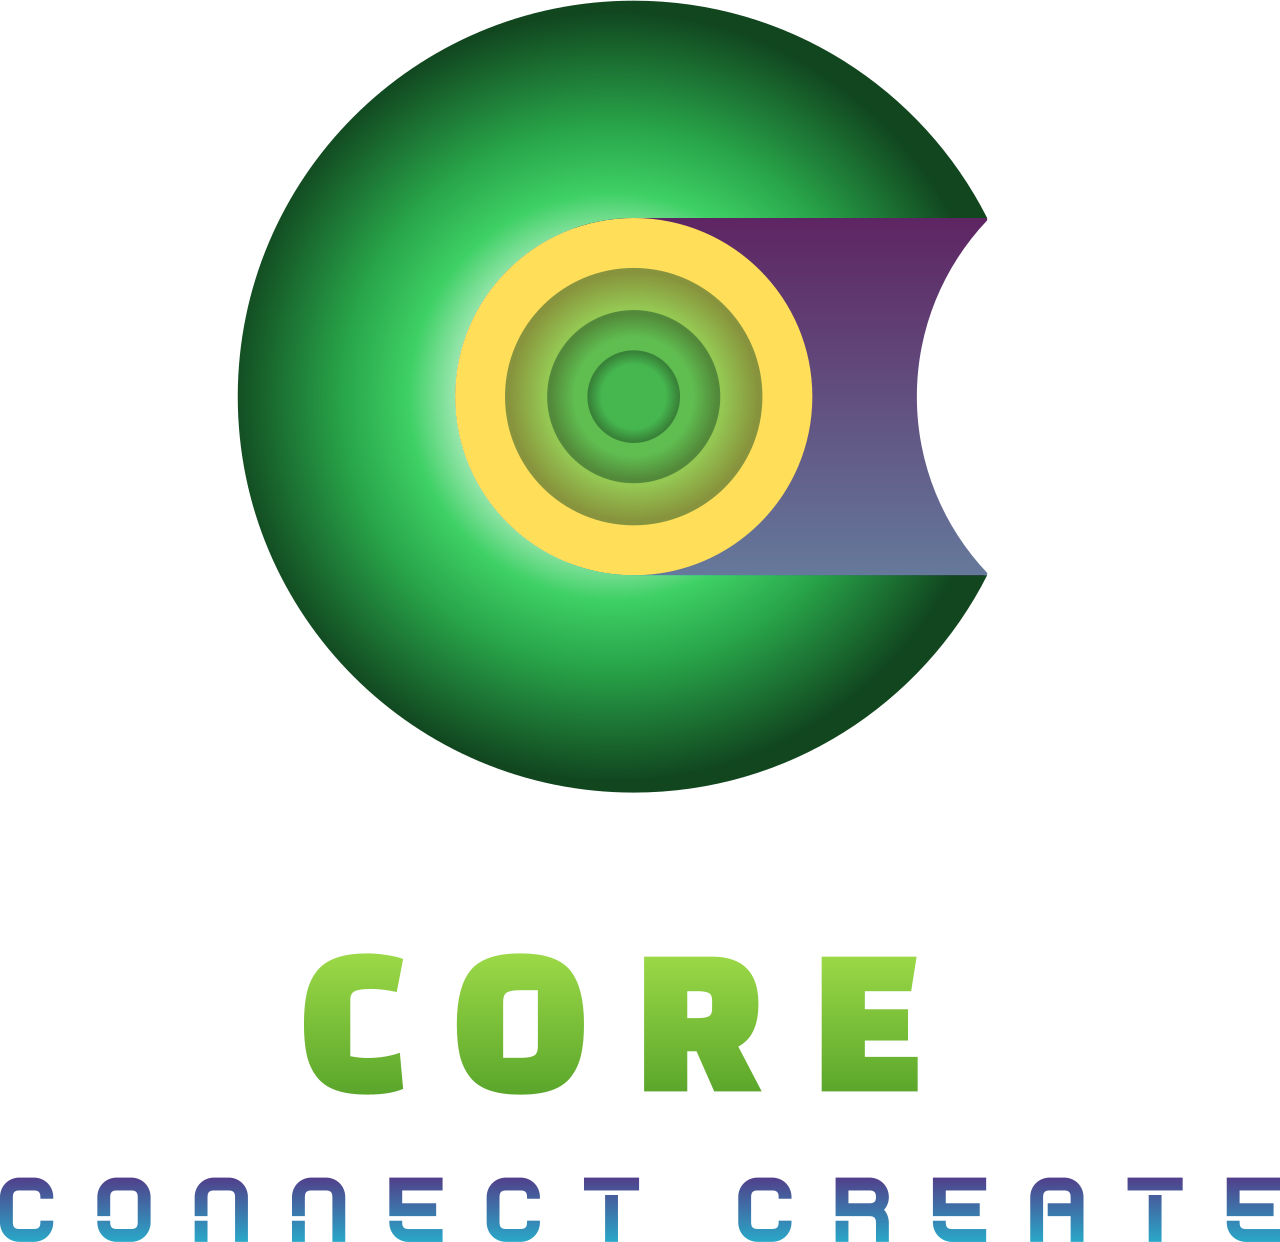 core's logo